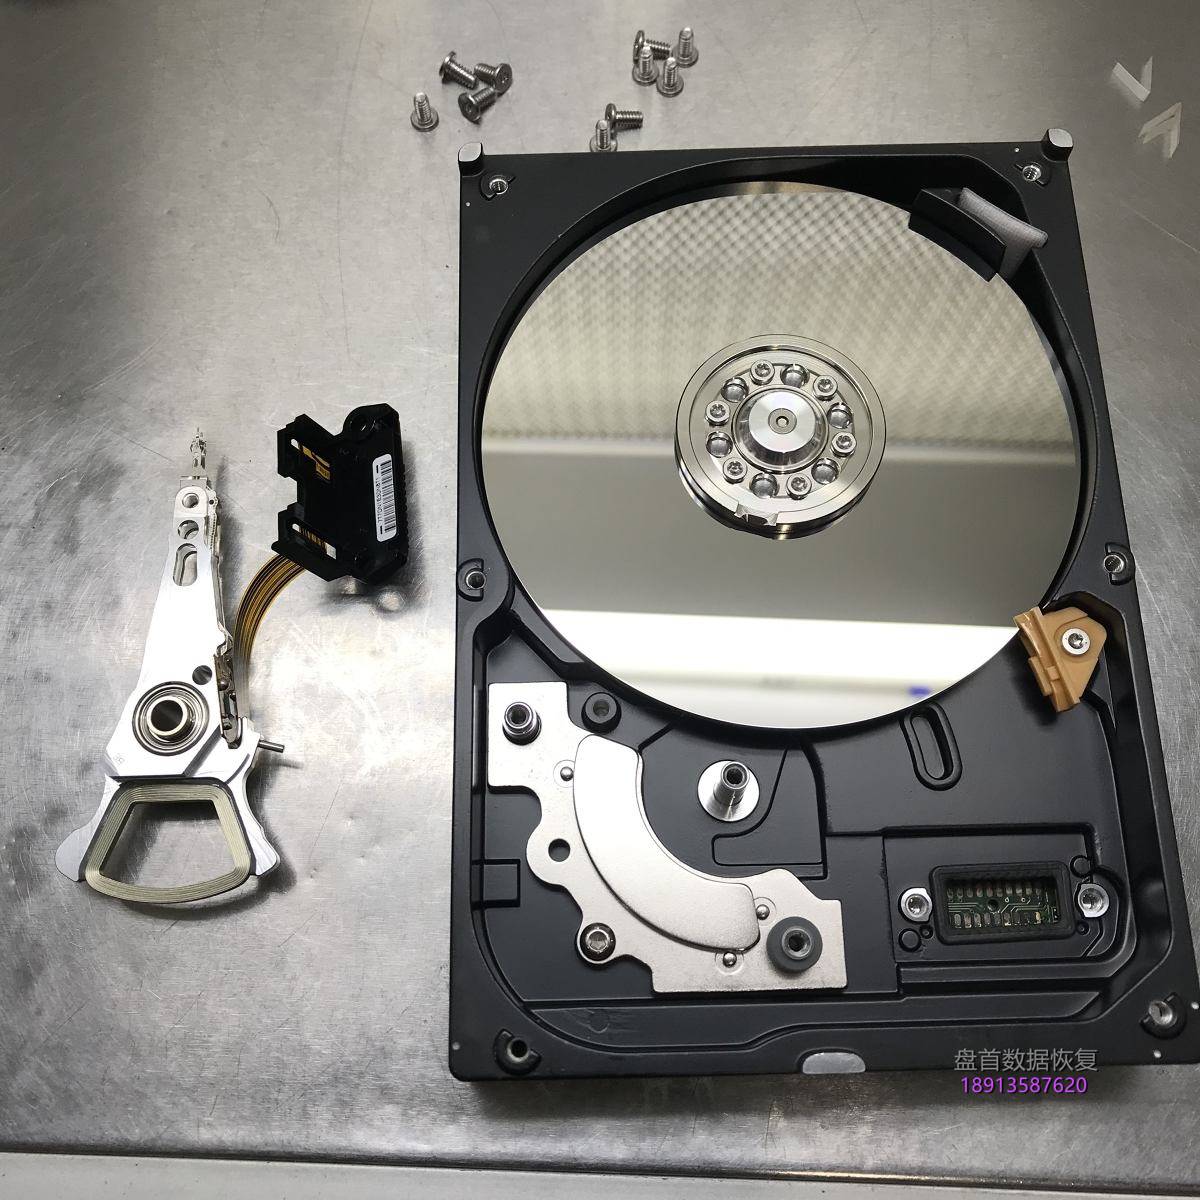 WD5000AAKX-001CA0硬盘磁头损坏敲盘异响